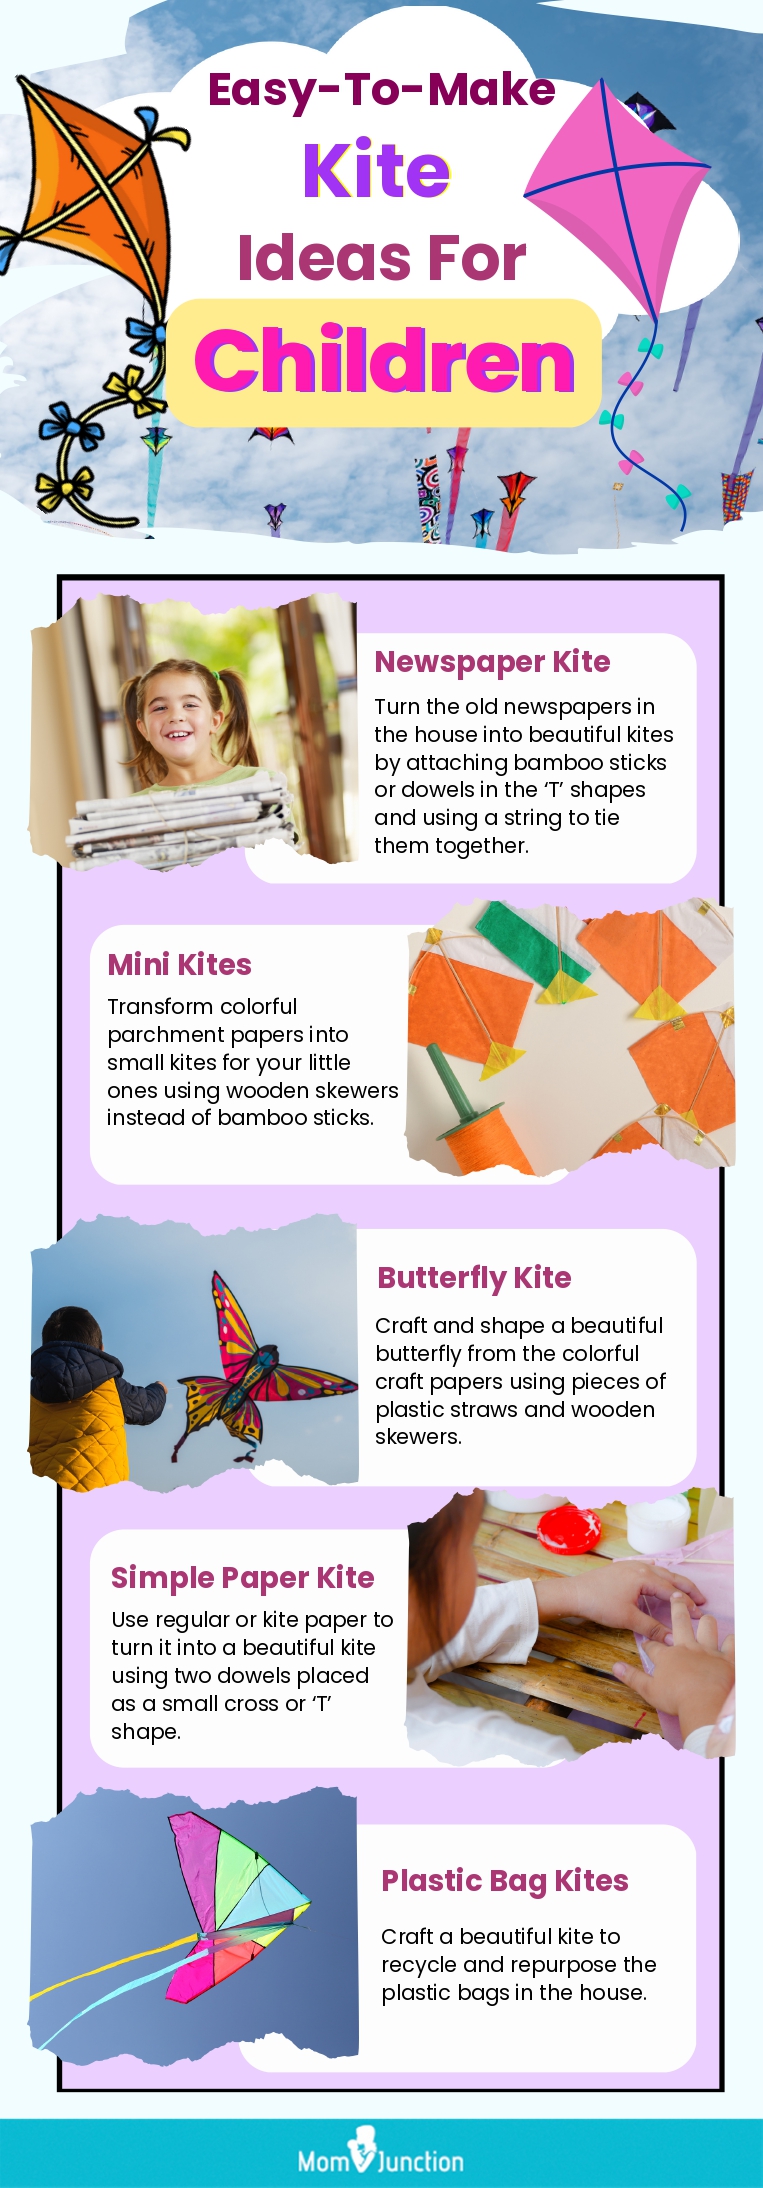 easy to make kite ideas for children (infographic)